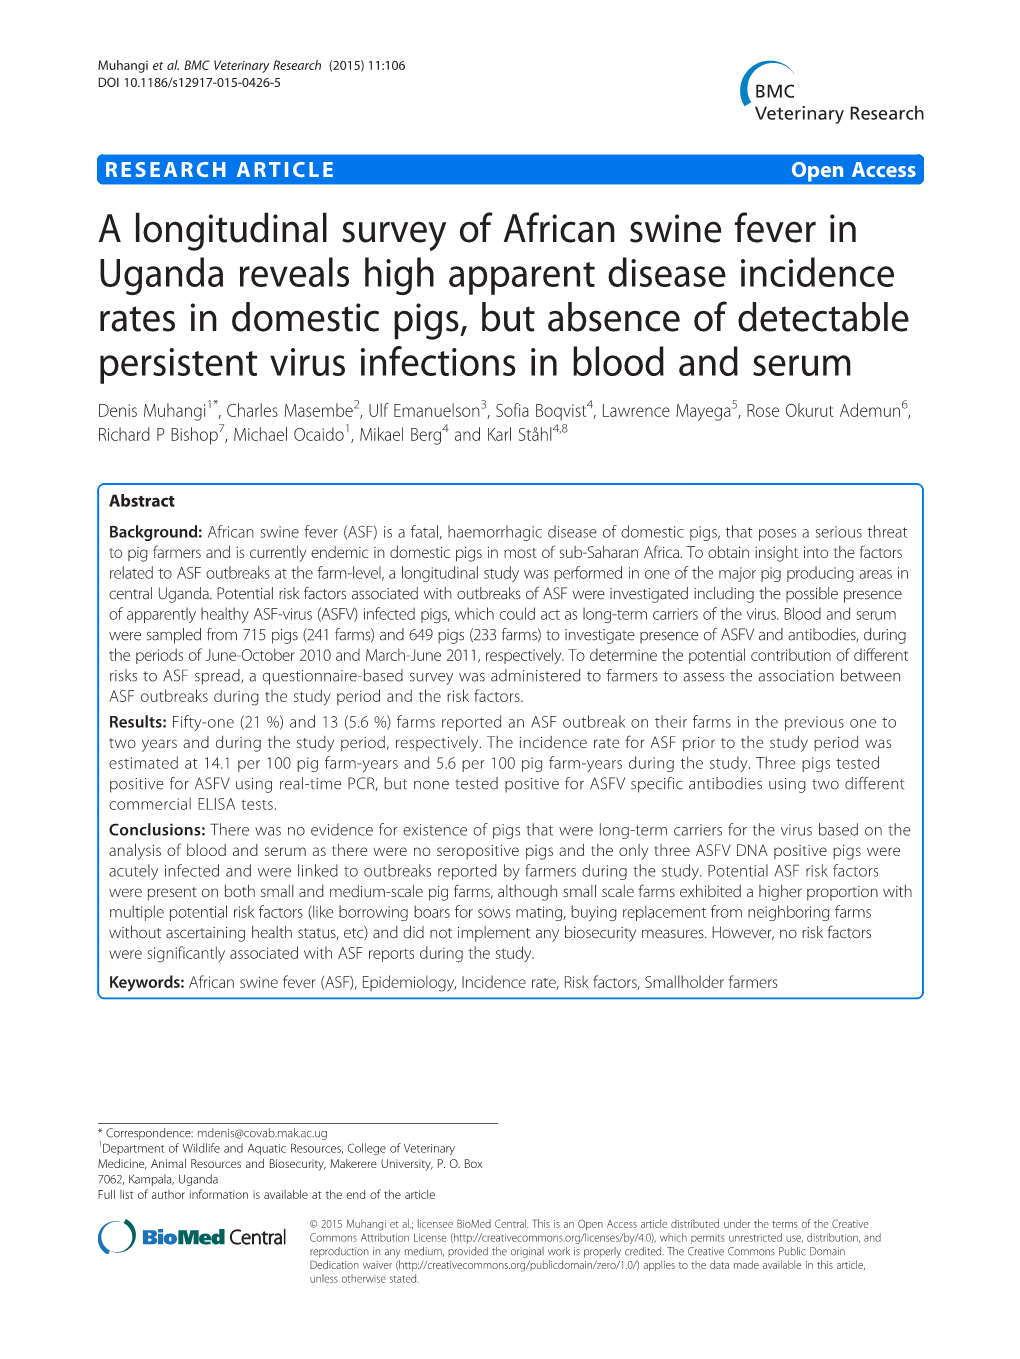 A Longitudinal Survey of African Swine Fever in Uganda Reveals High